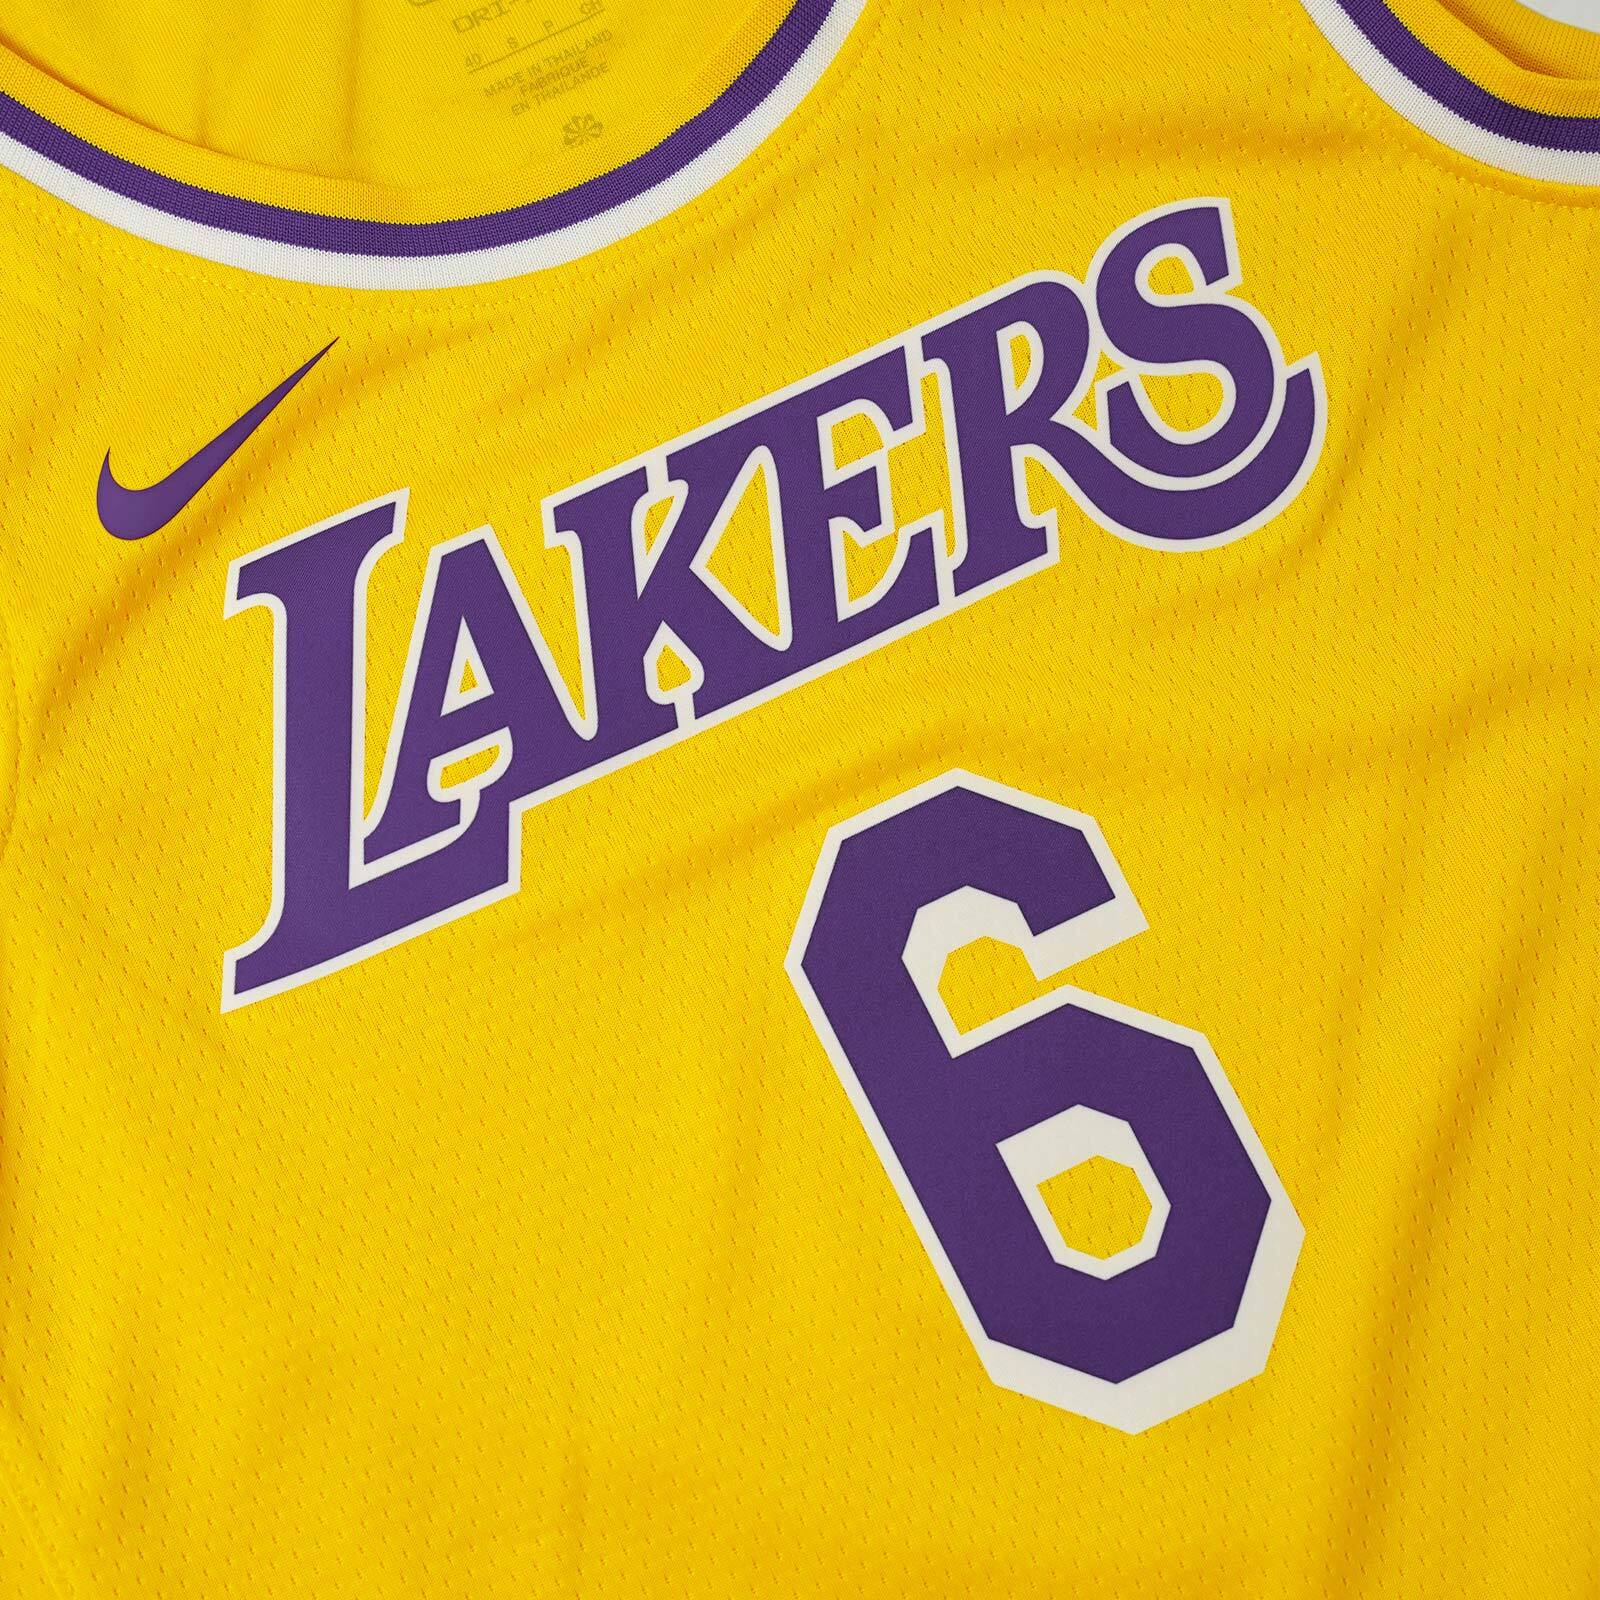 Nike NBA Swingman Jersey Lakers Icon Edition 2020 - LEBRON JAMES Yellow